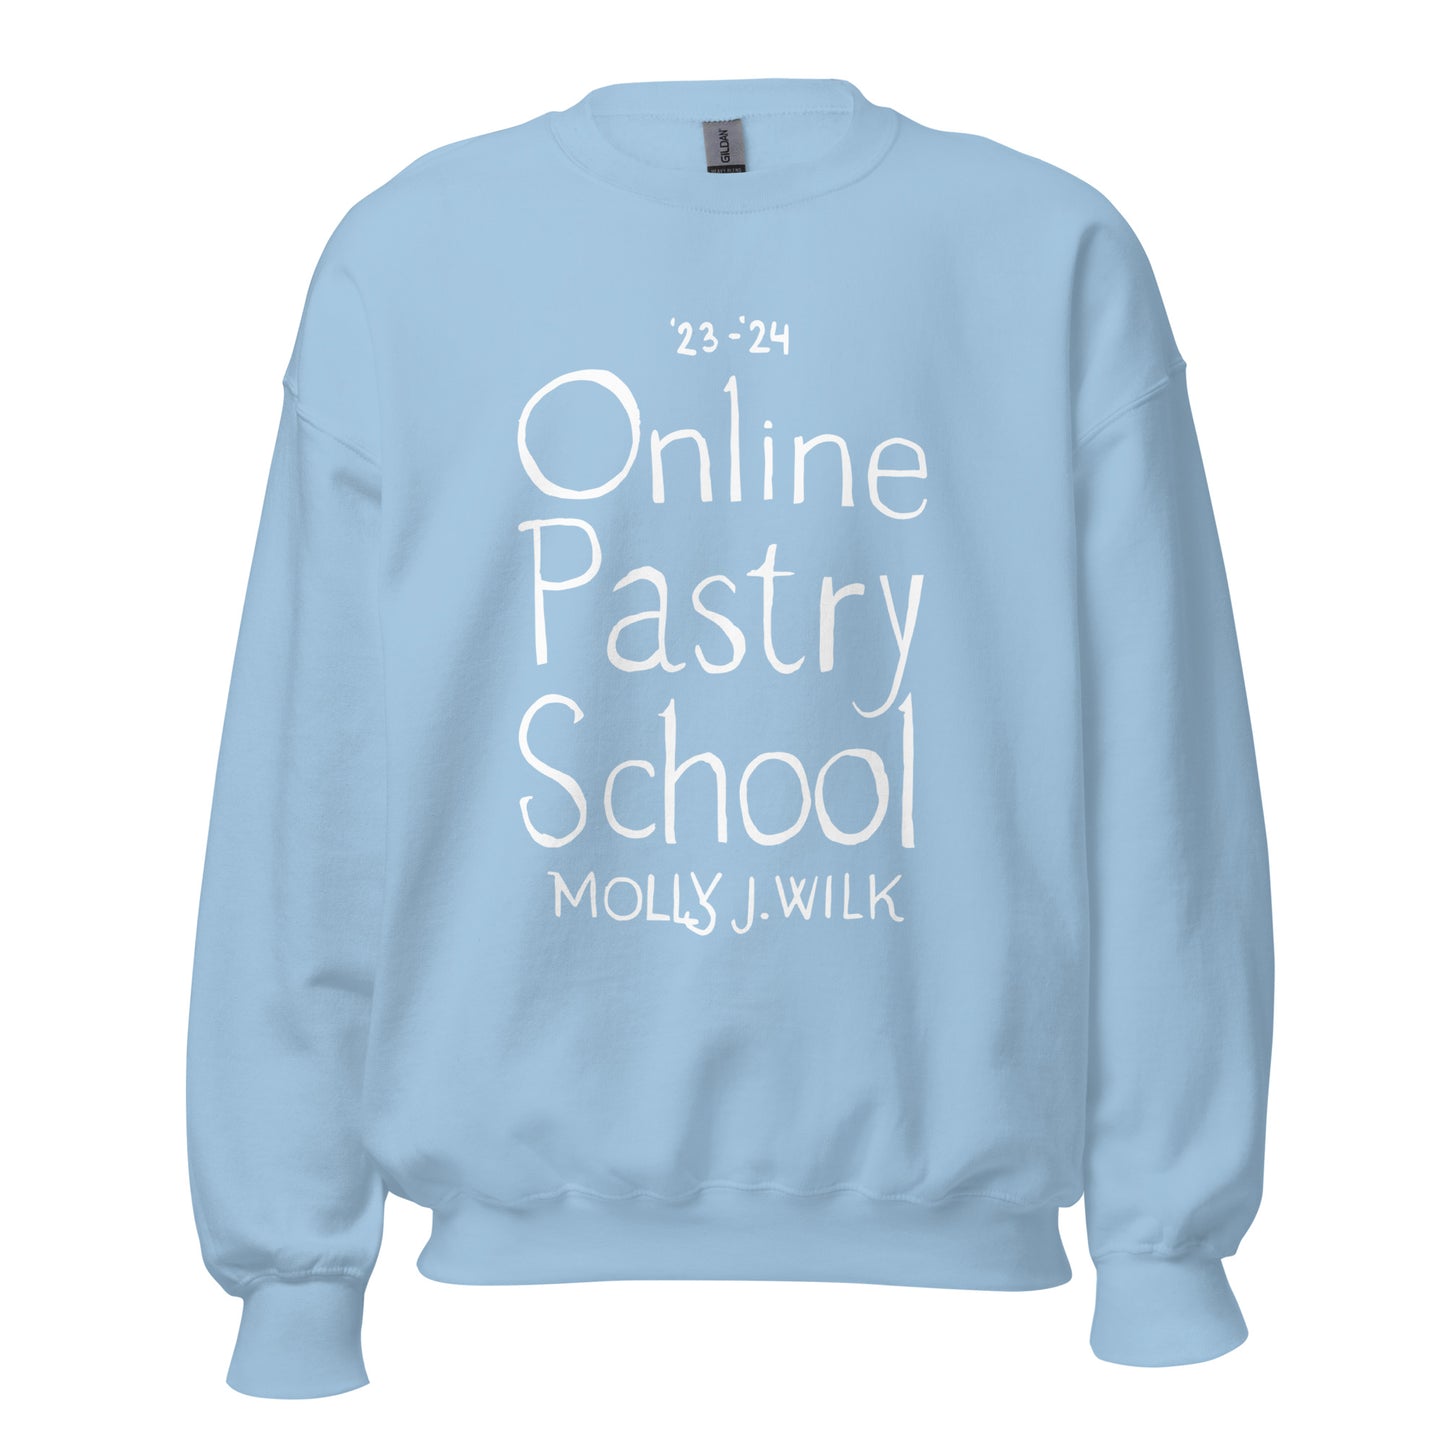 Online Pastry School Sweatshirt - White Text